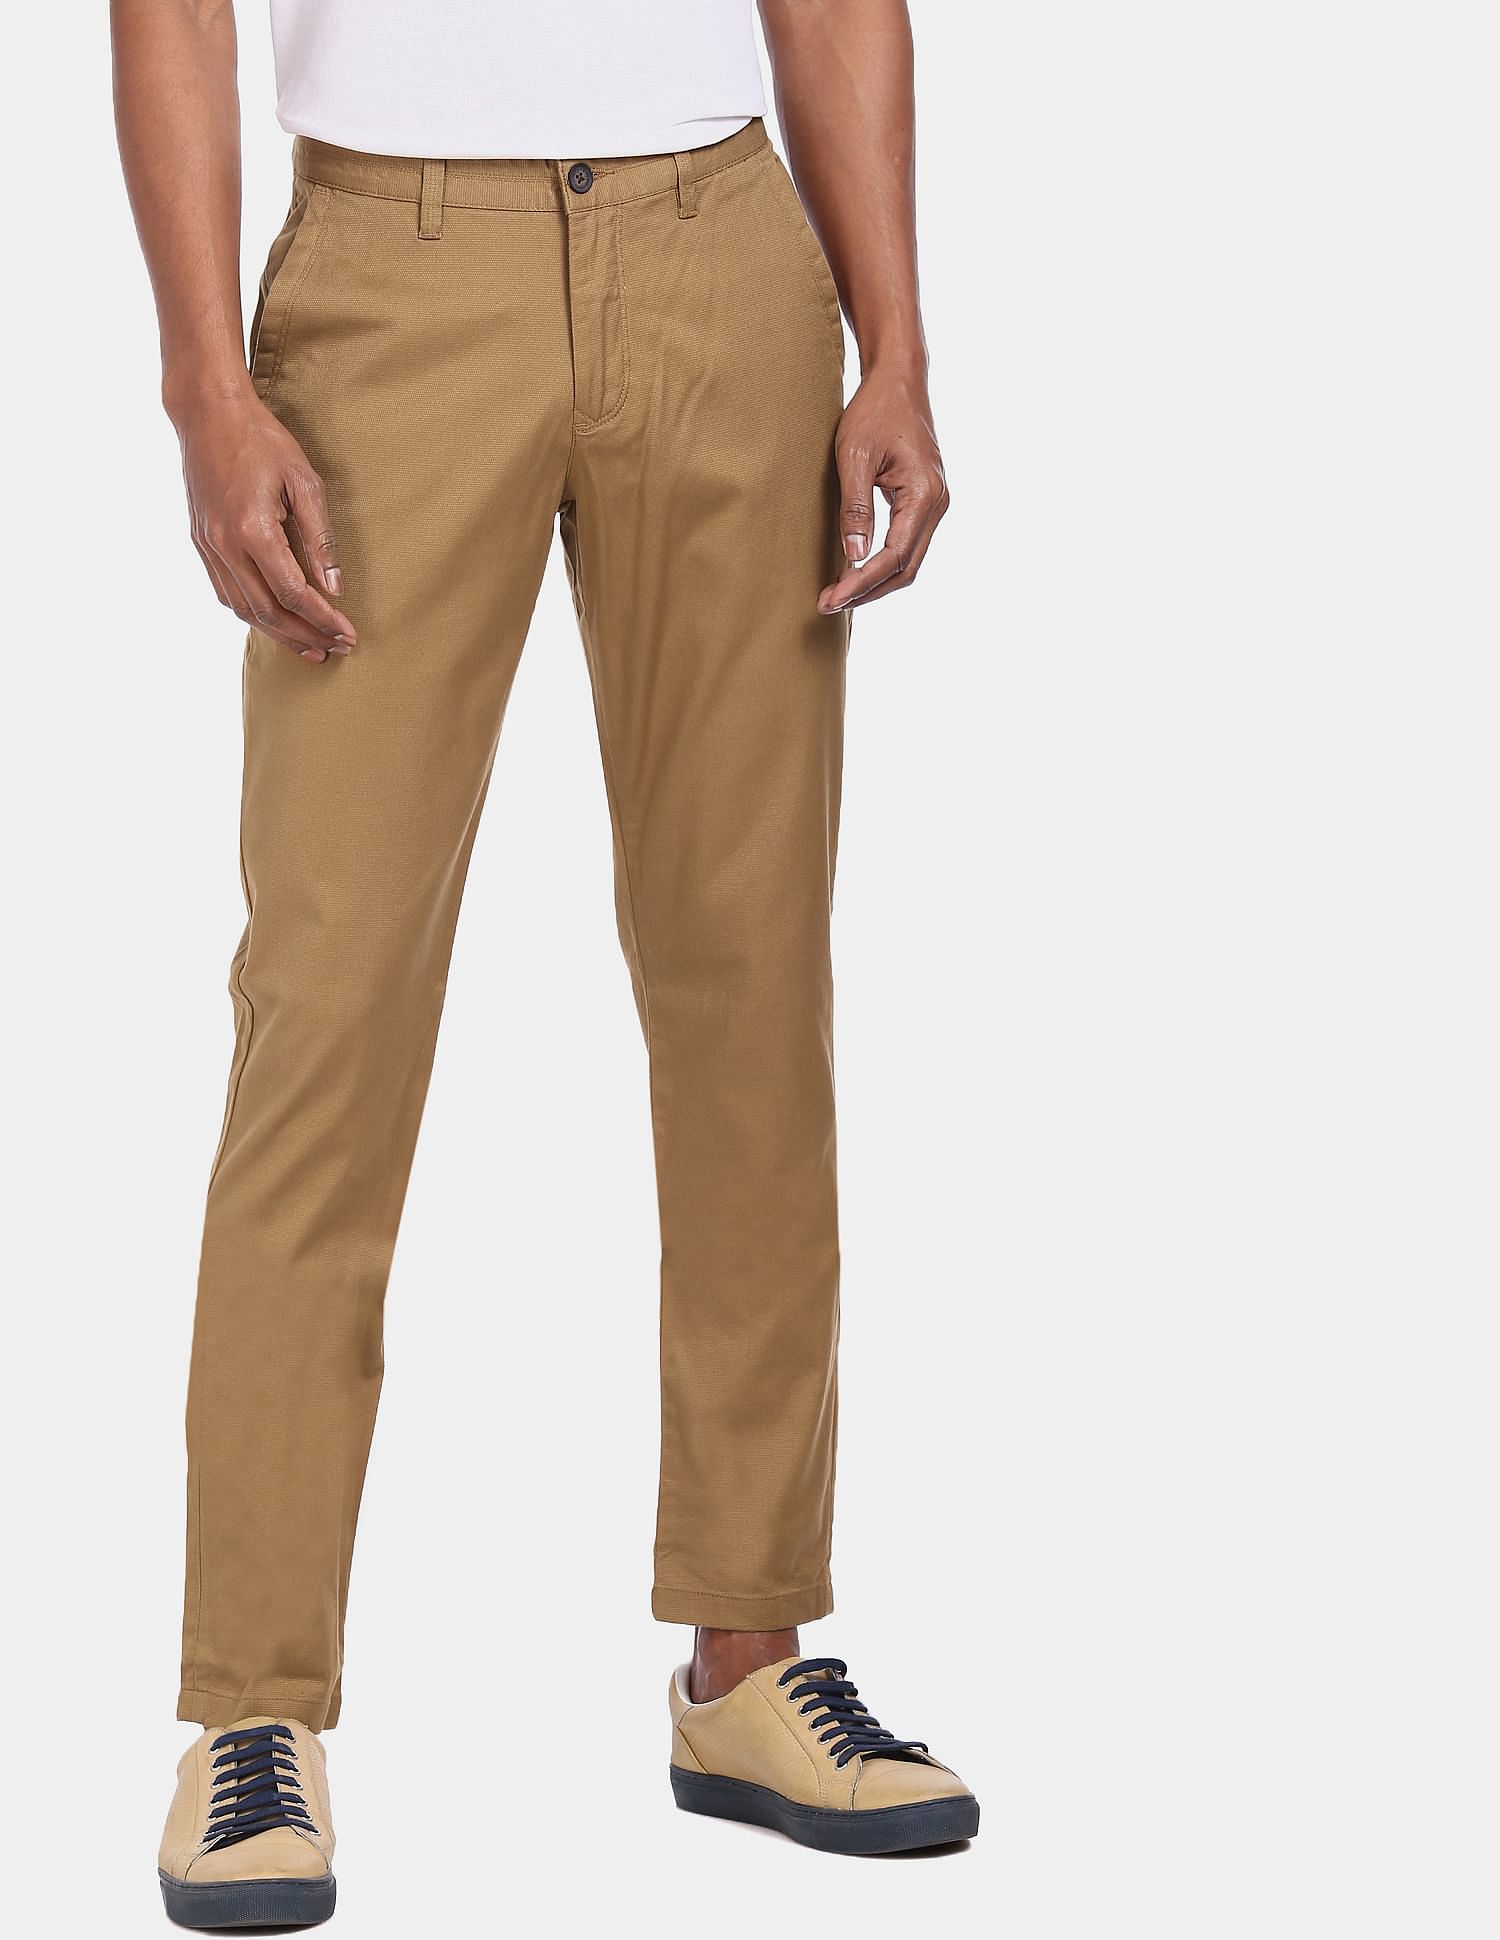 Buy Light Brown Trousers & Pants for Men by Metal Online | Ajio.com